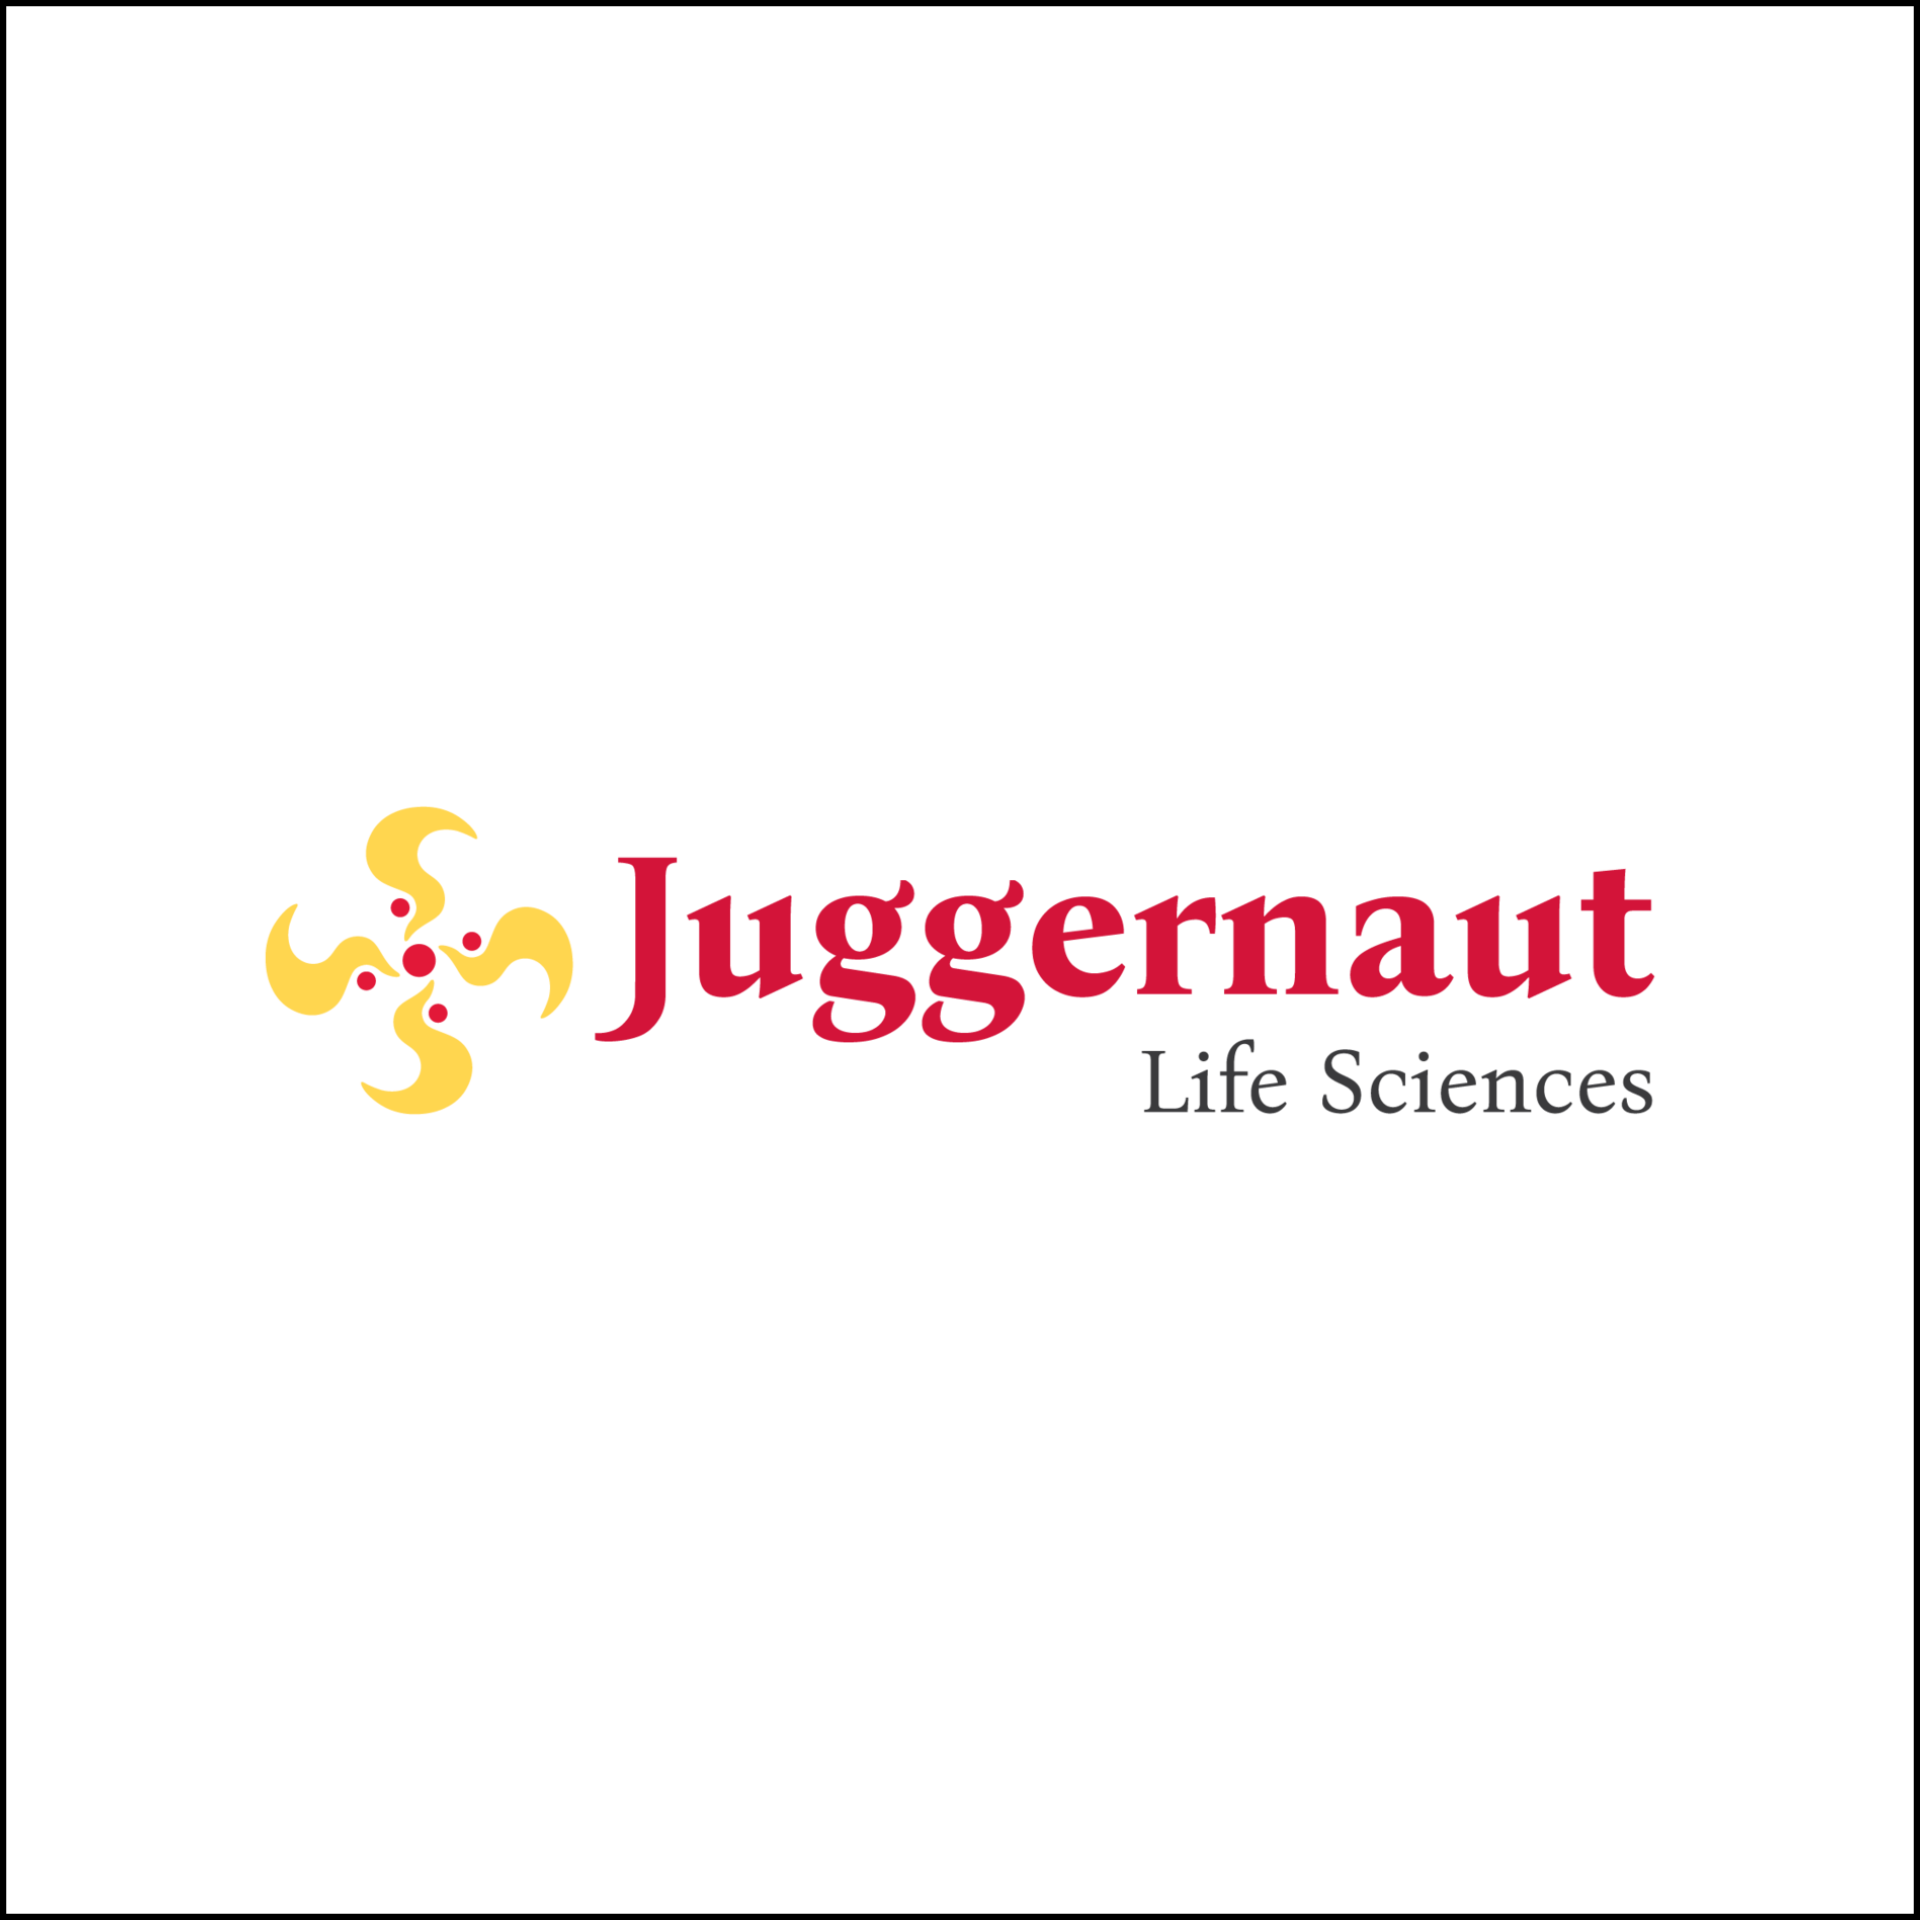 Juggernaut.png